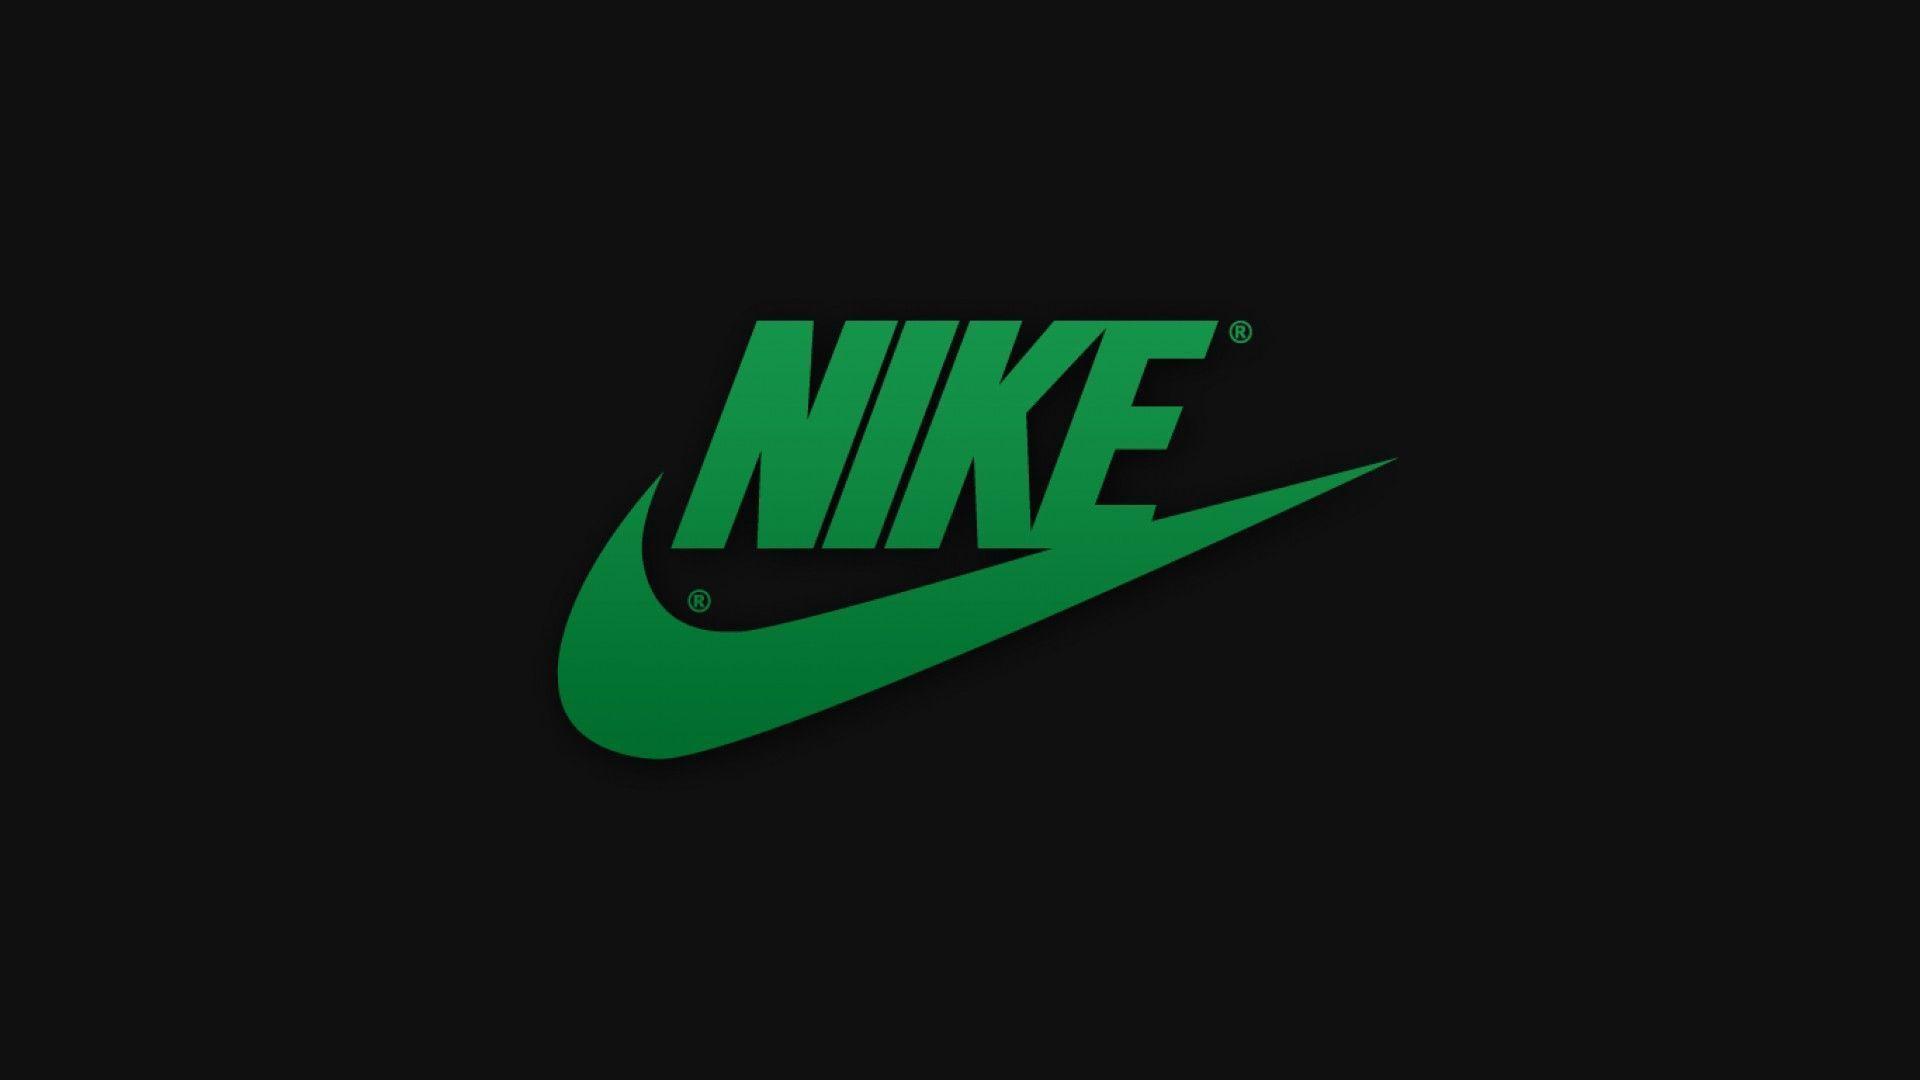 Nike Logo Wallpapers Neon Wallpaper Cave